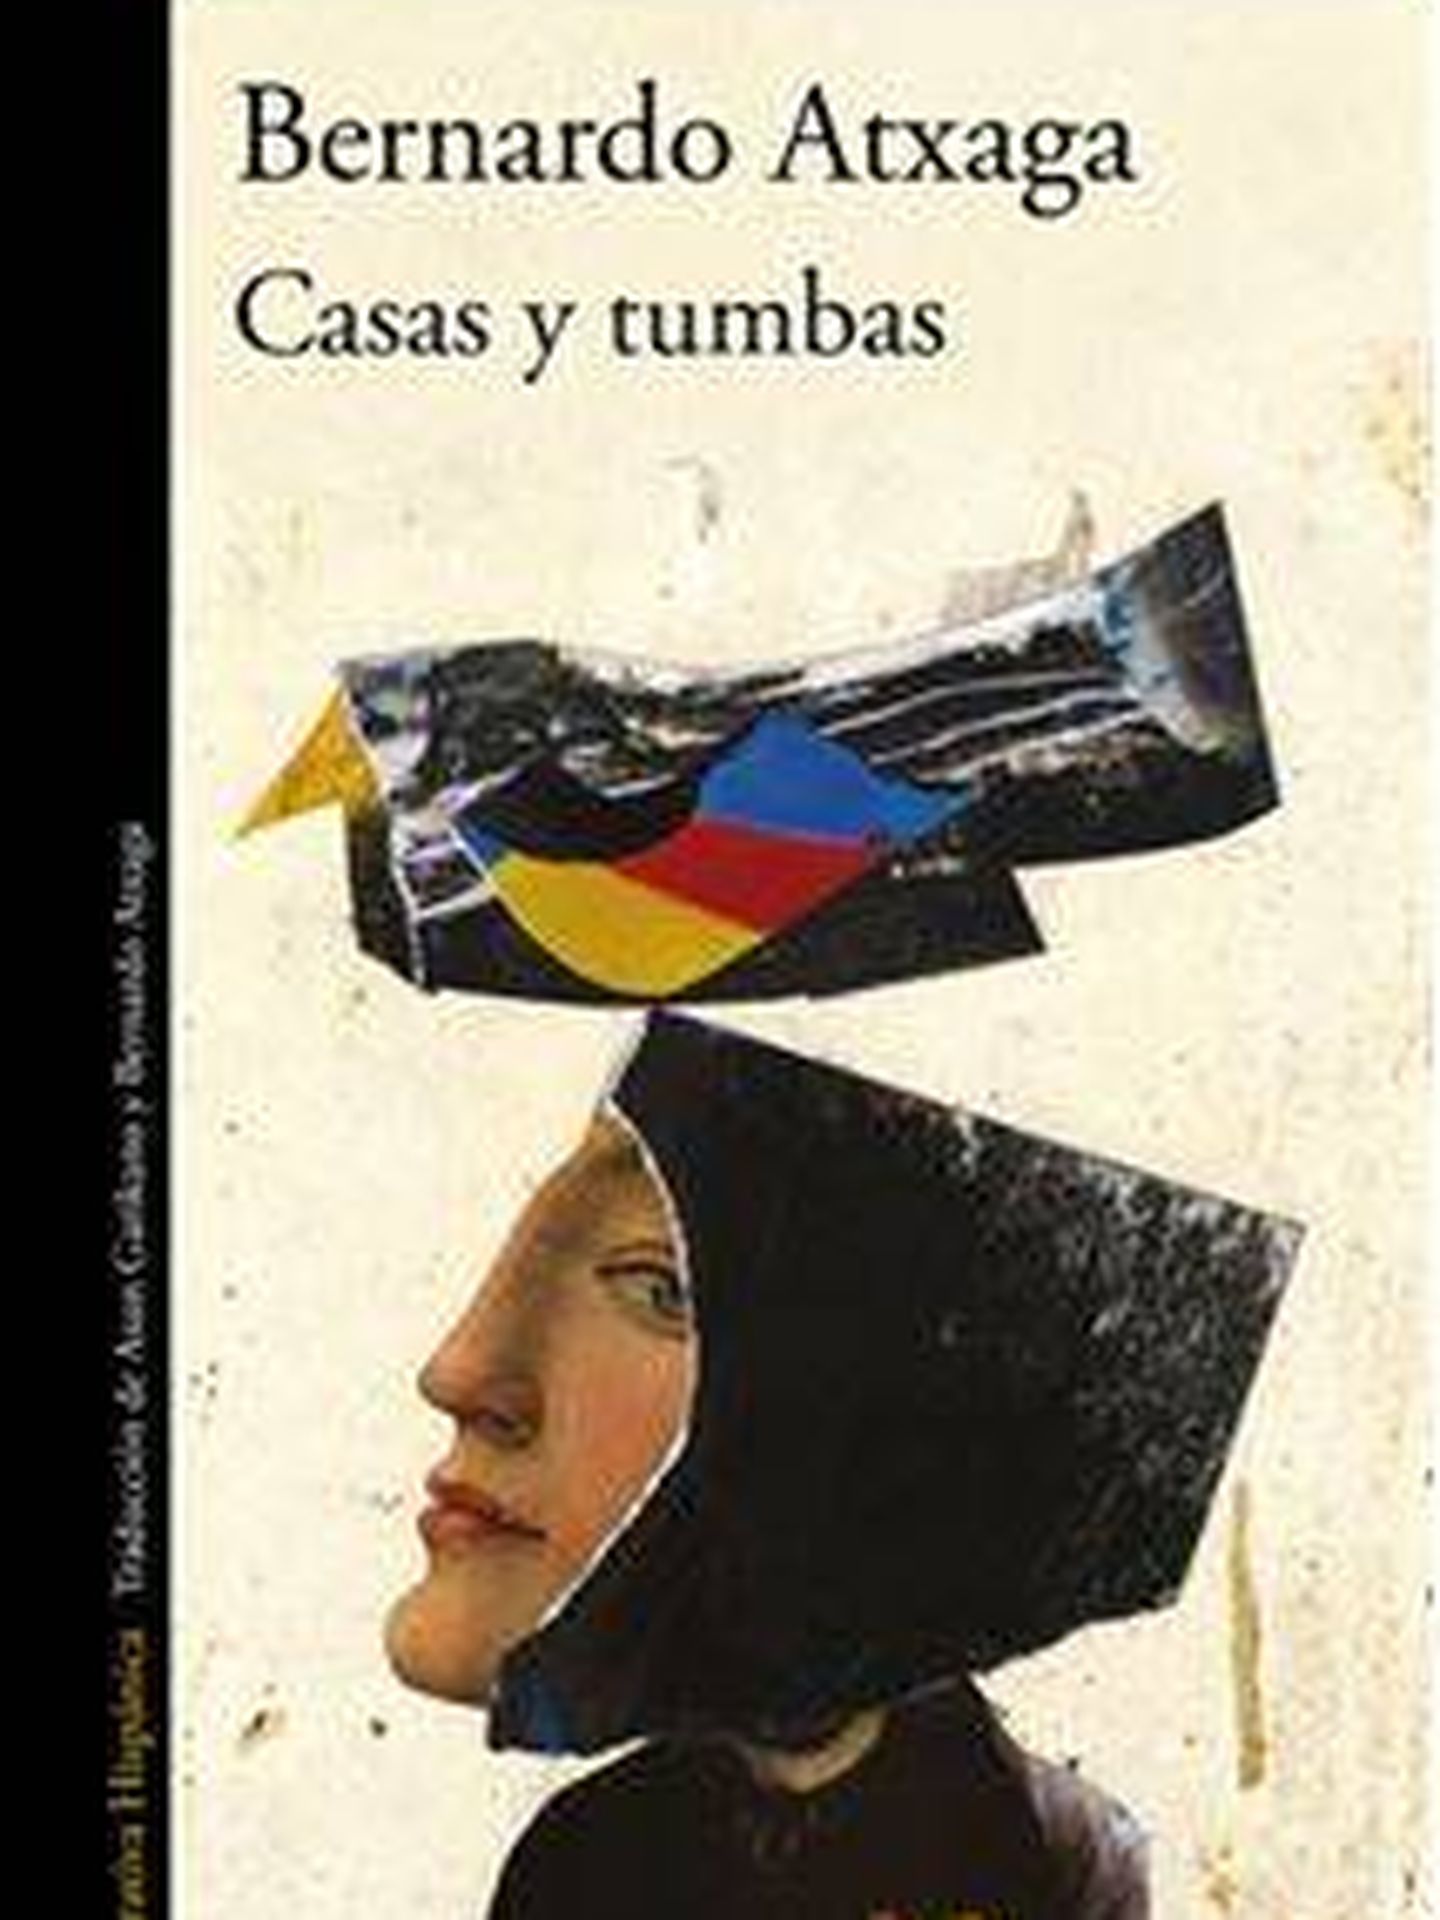 'Casas y tumbas', de Bernardo Atxaga